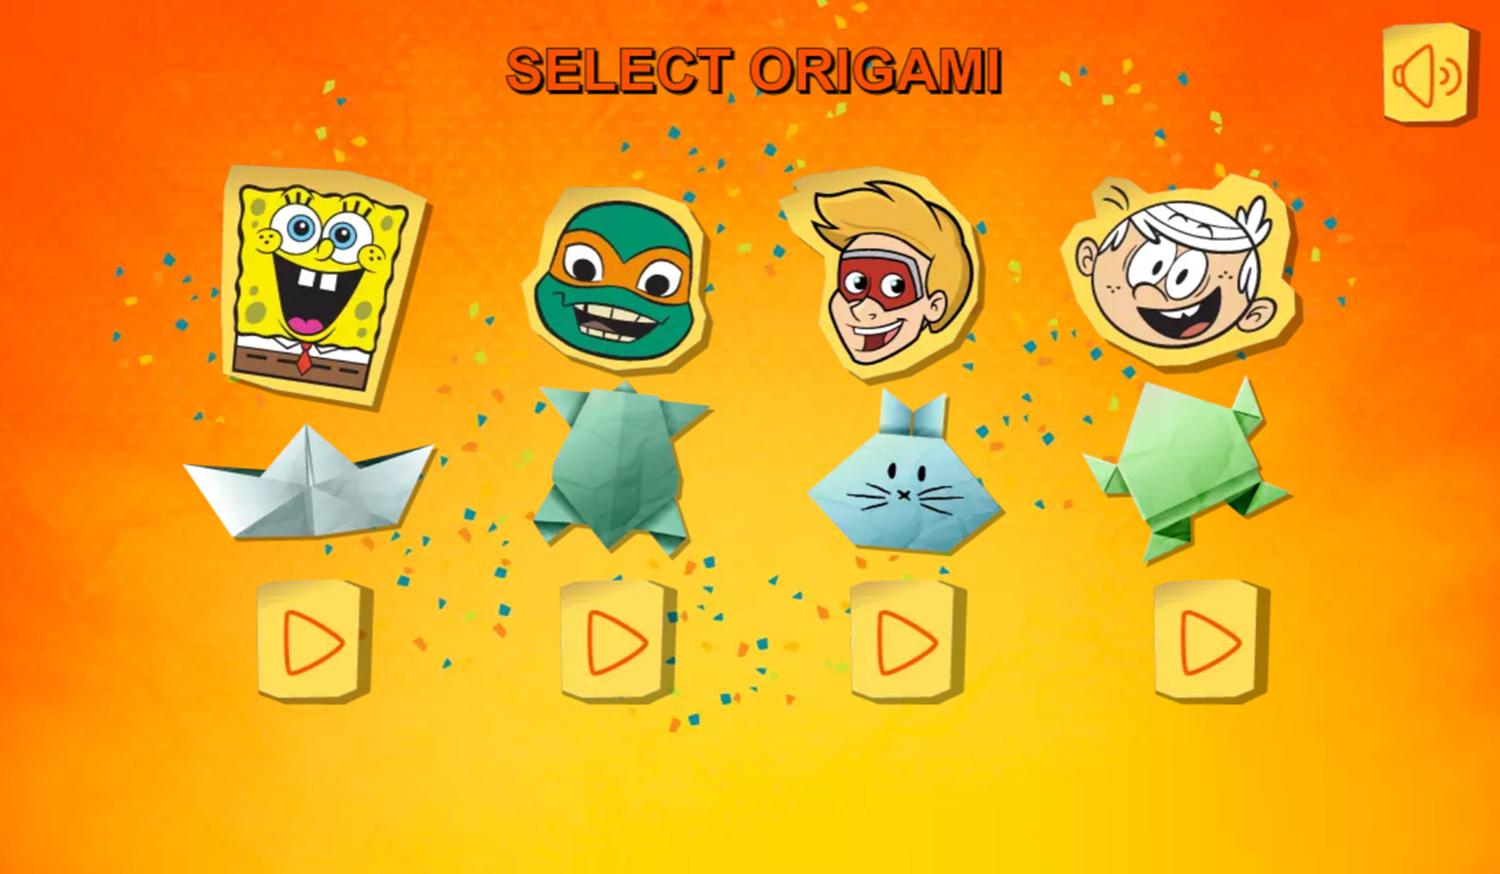 Learn Origami Game Select Origami Screenshot.